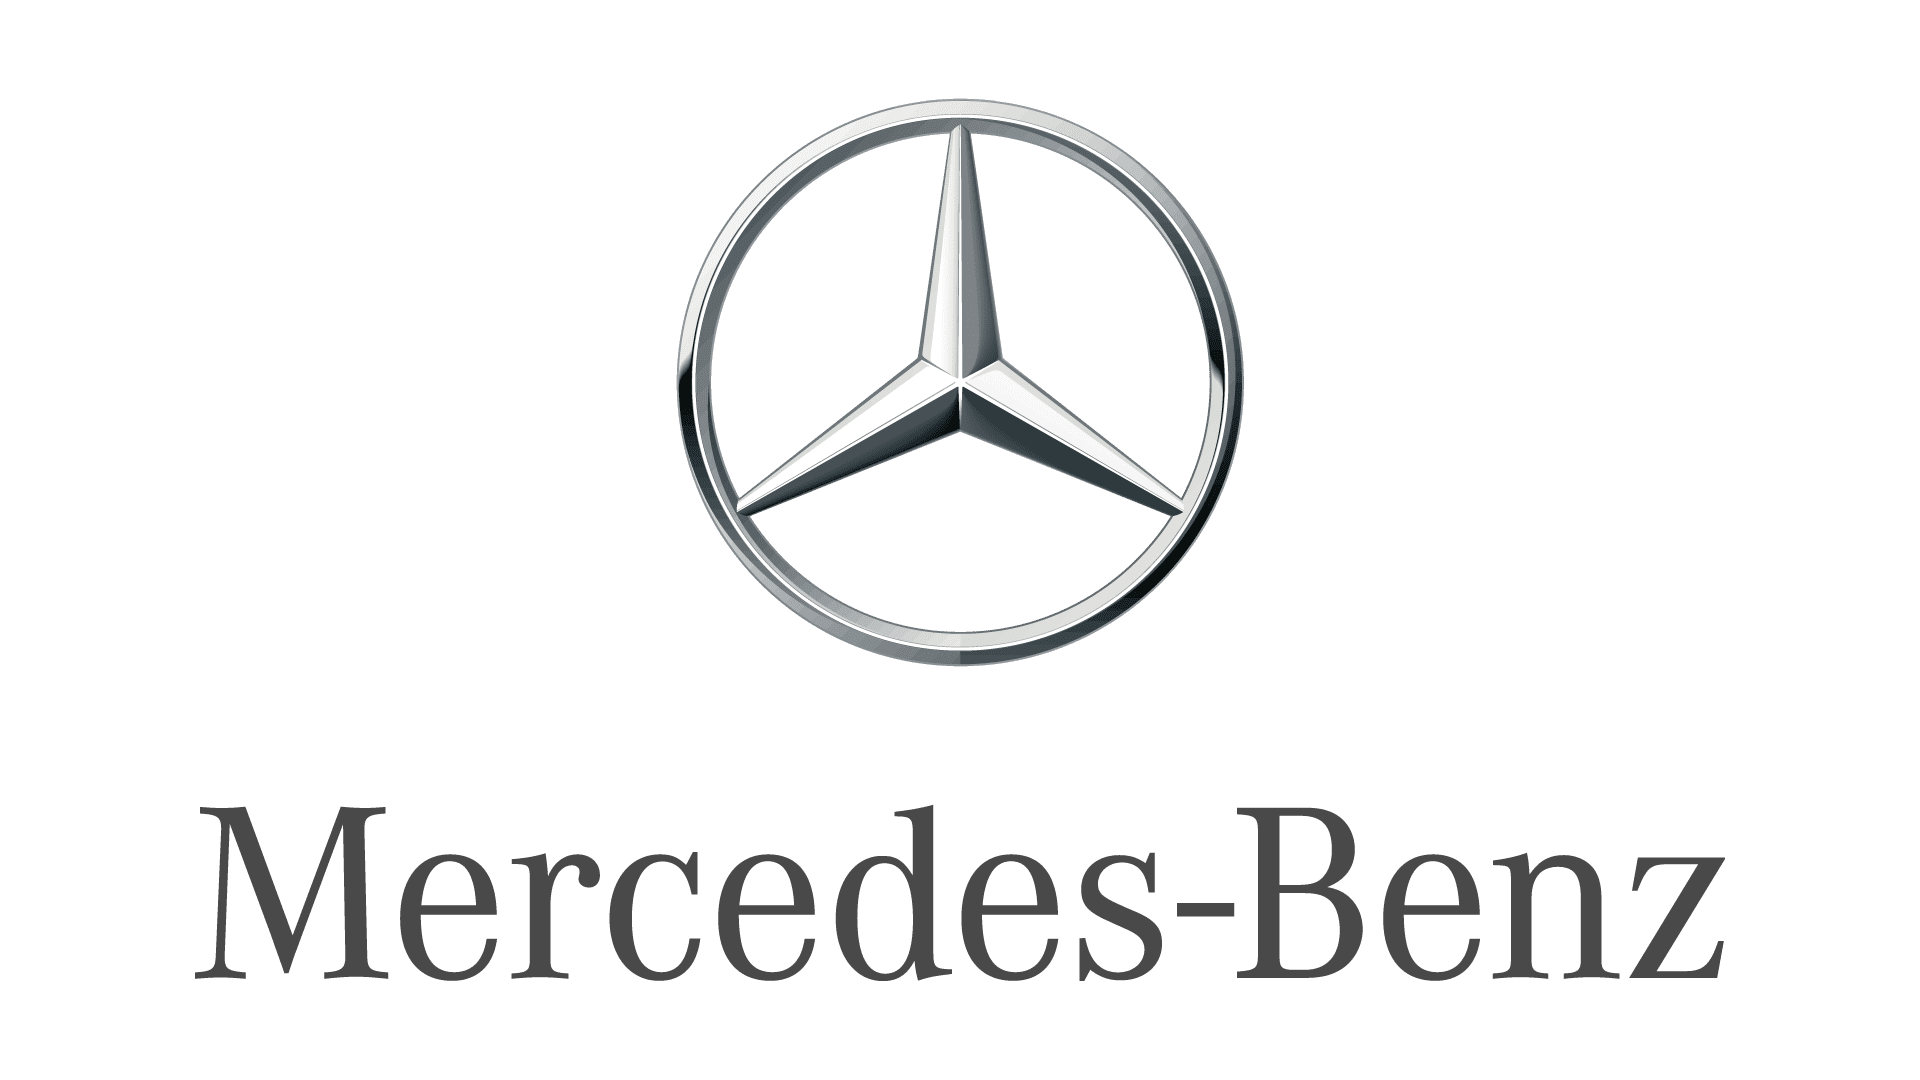 Комфорт Mercedes-Benz C-class Купе Пакети обладнання функцій комфорту #1